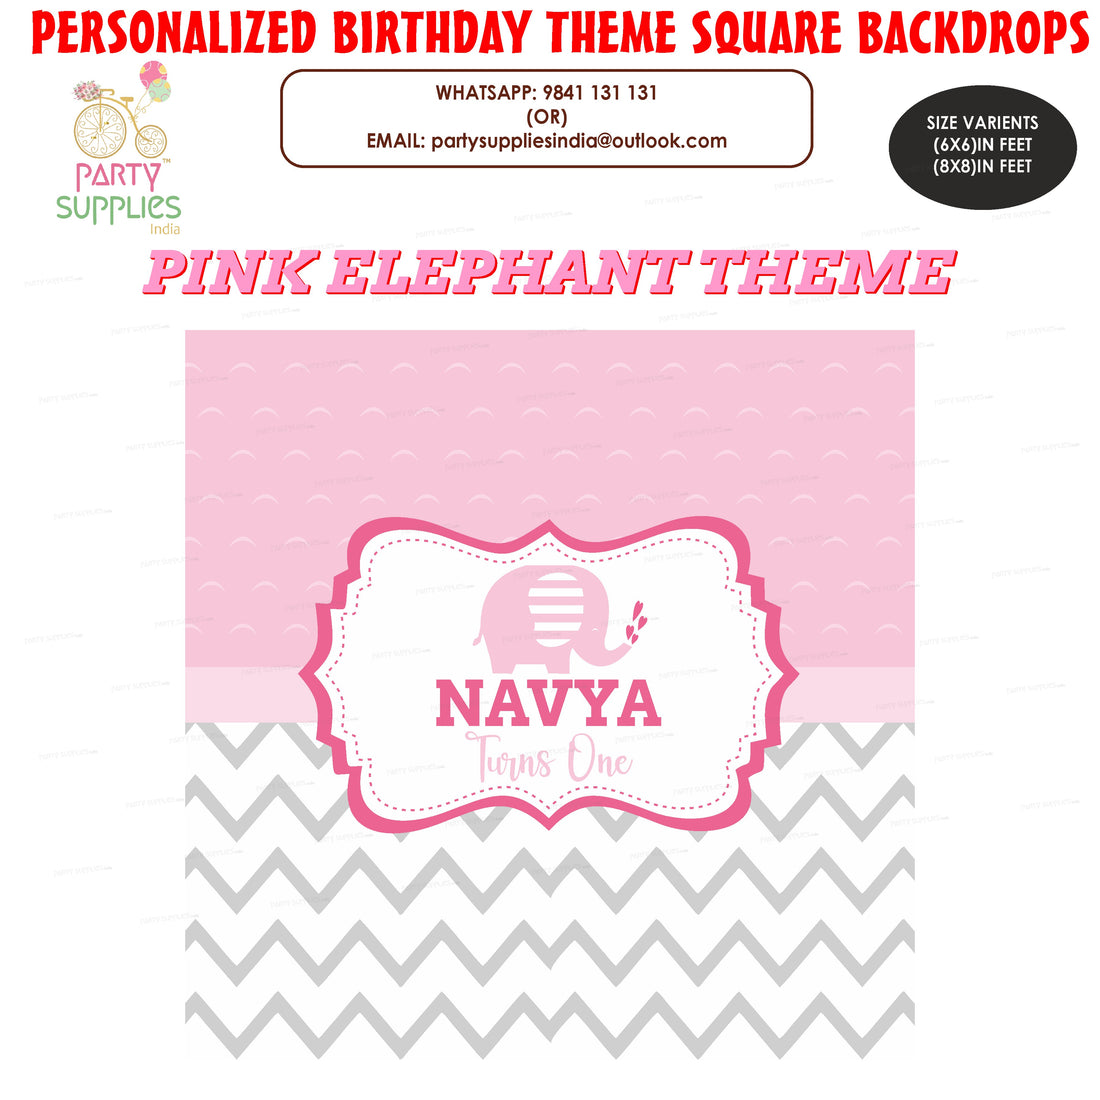 PSI Pink Elephant Theme Customized Square Backdrop